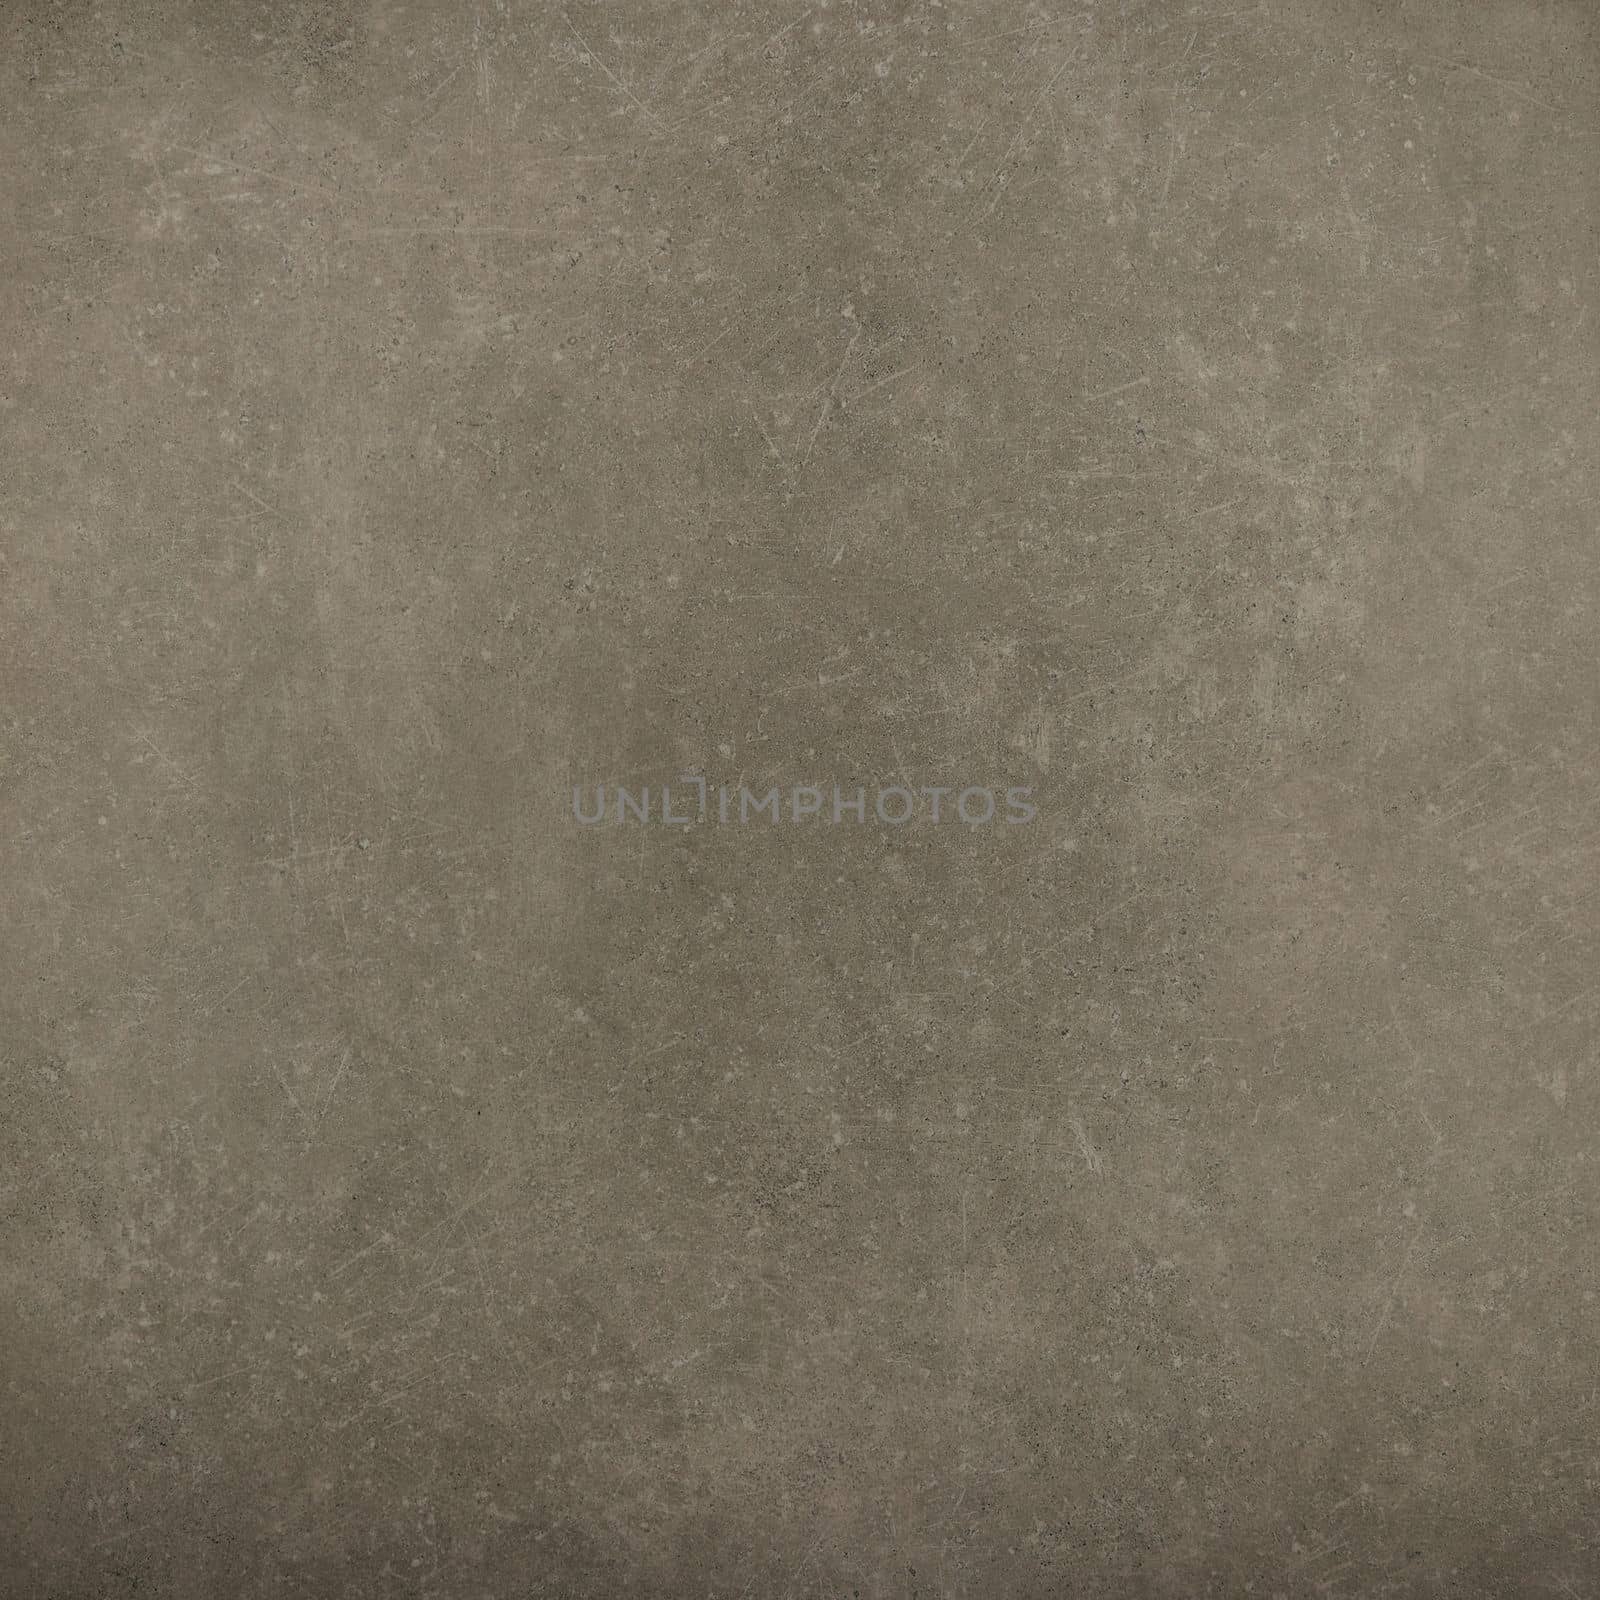 Uneven gray concrete background texture by BreakingTheWalls